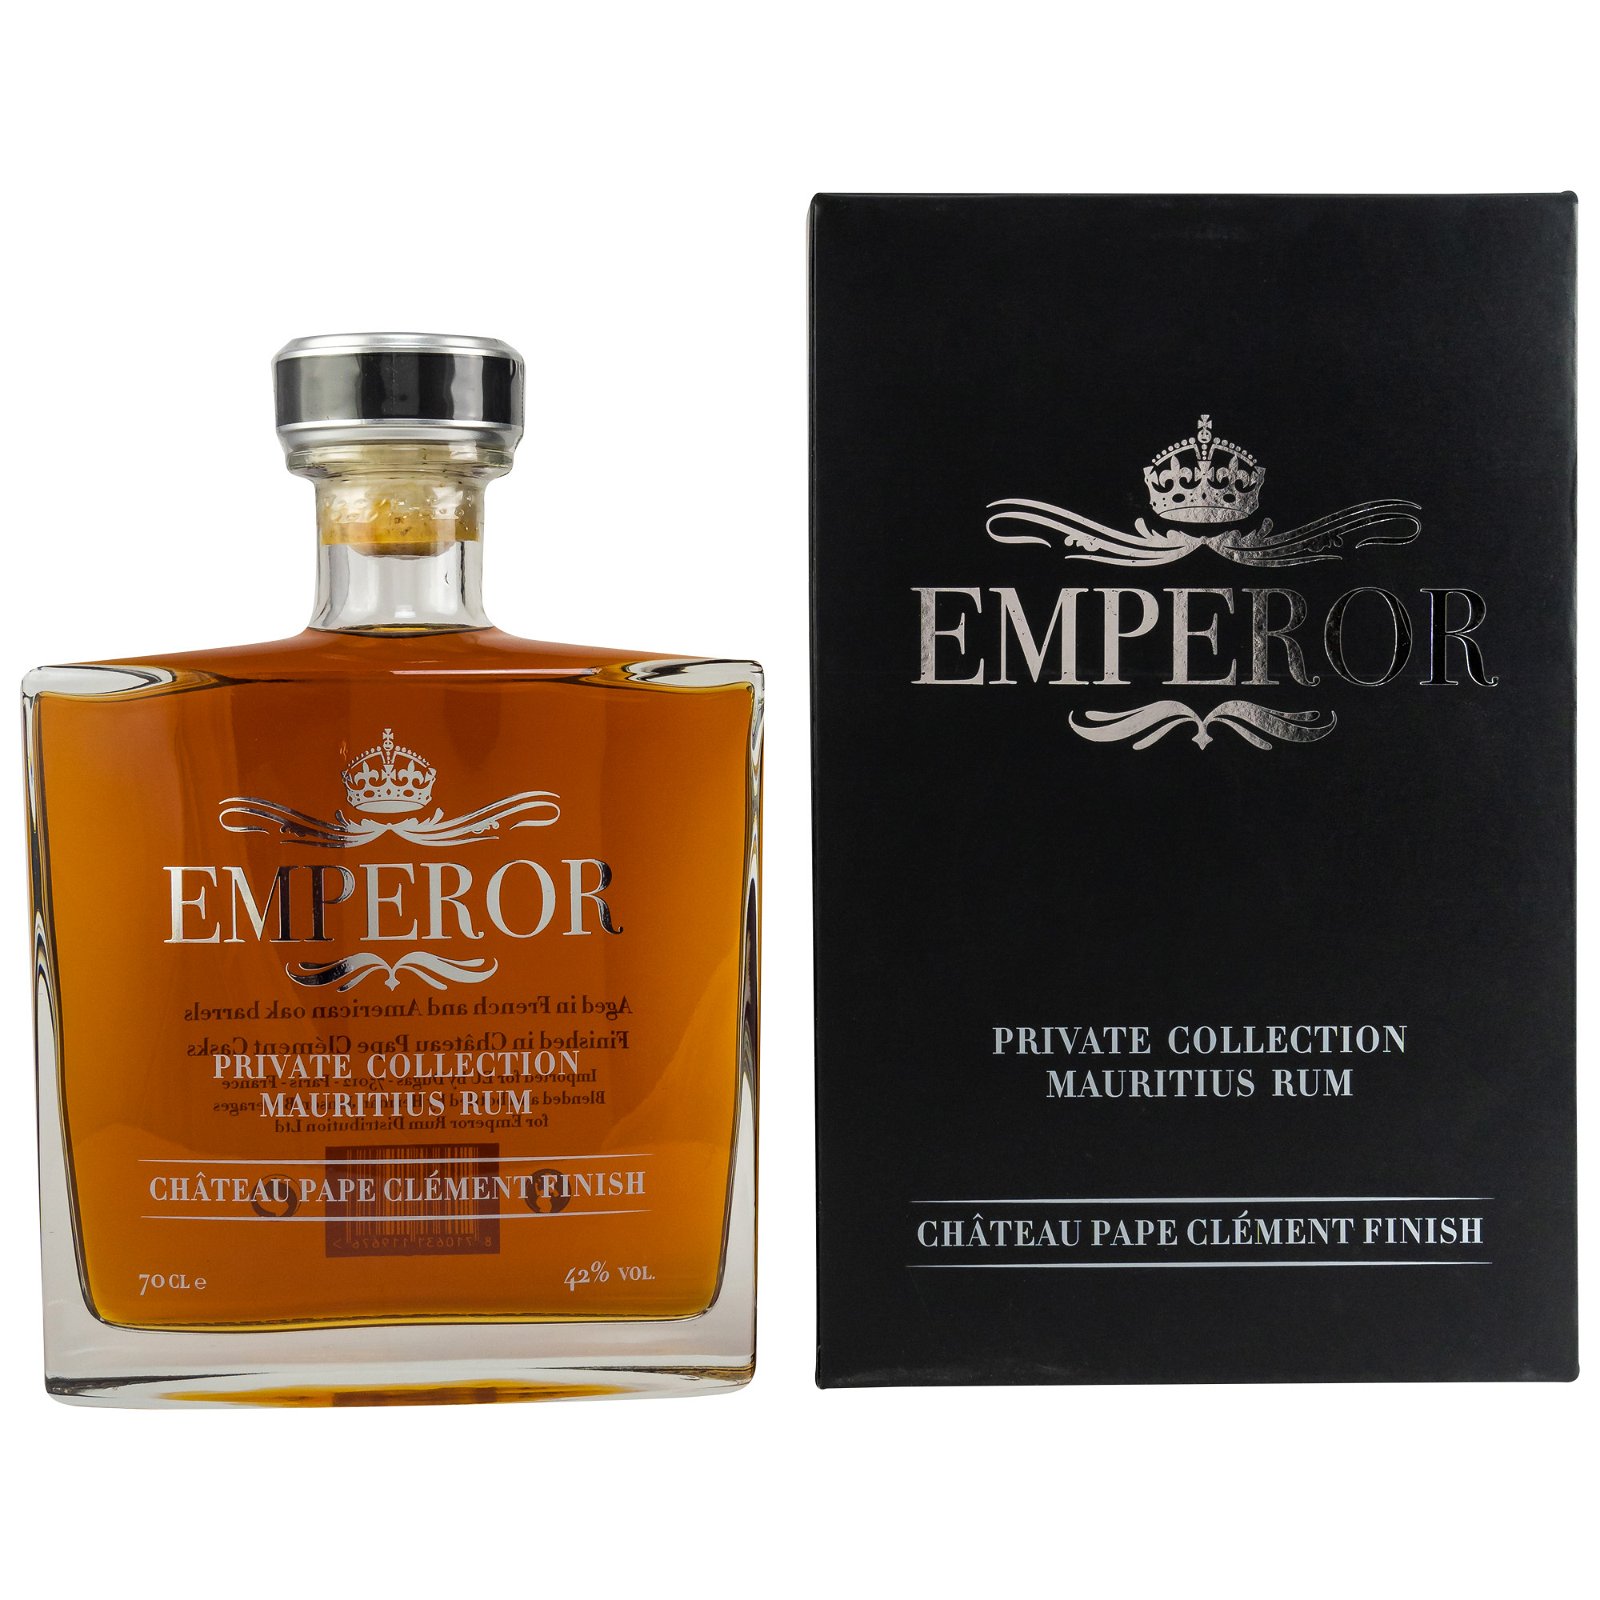 Emperor Rum Private Collection Château Pape Clément Finish